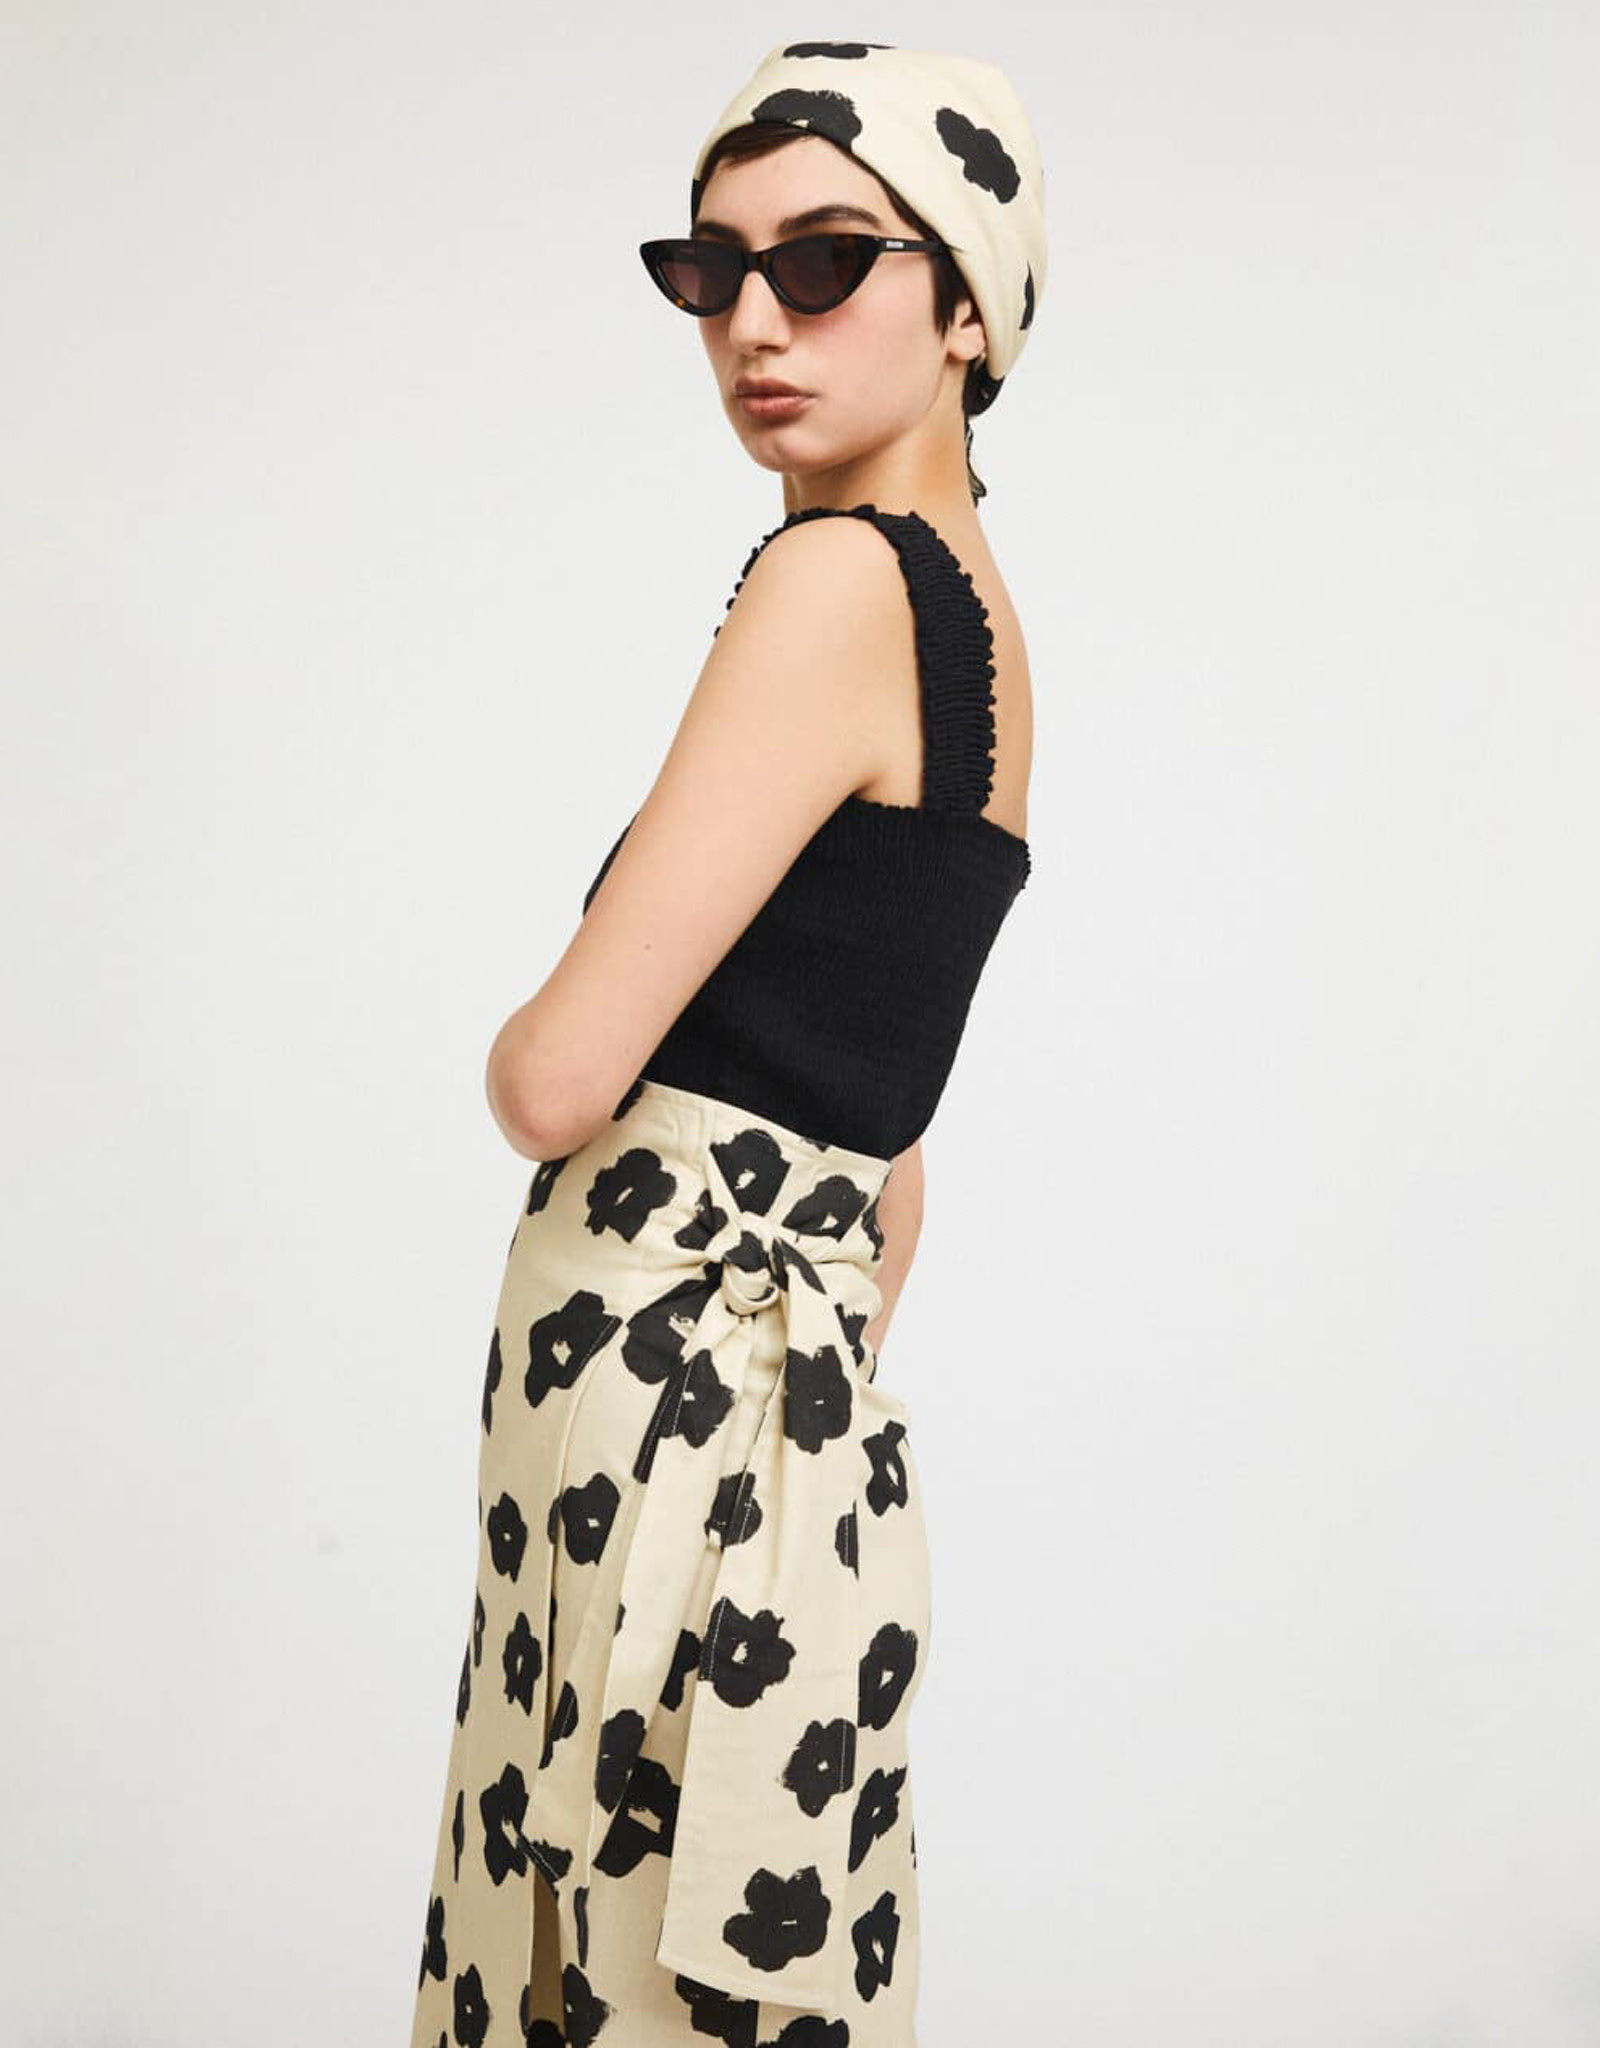 Rita Row Grace Pareo Skirt in Floral Print